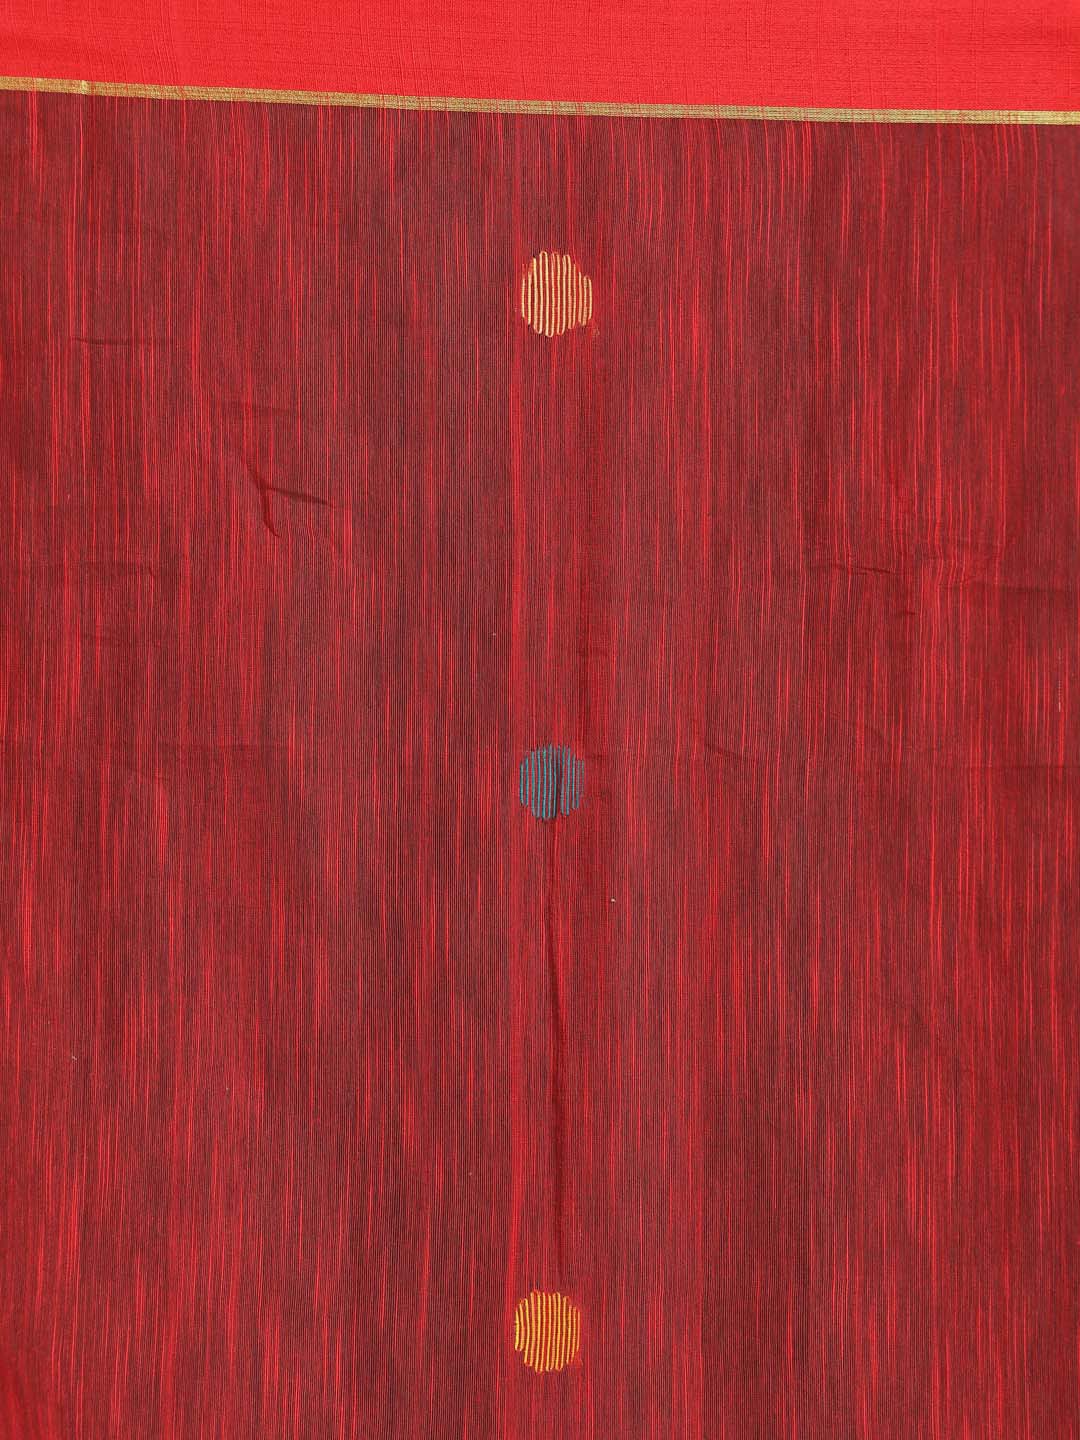 Indethnic Red Bengal Handloom Cotton Blend Work Saree - Saree Detail View